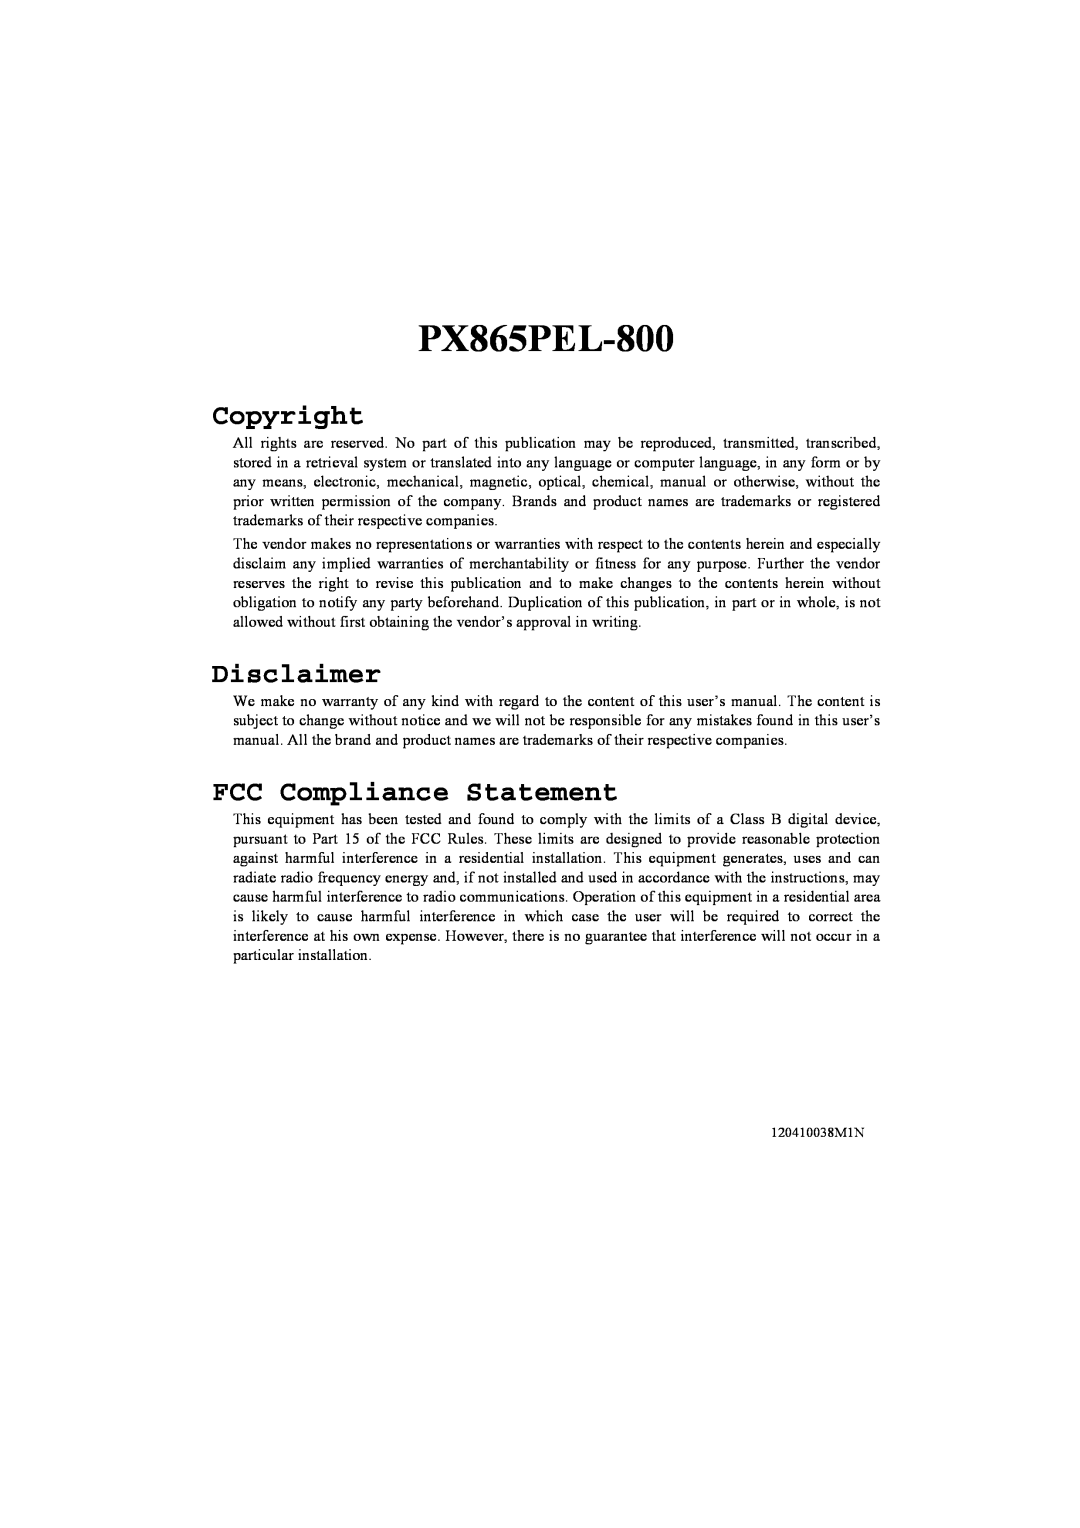 Intel PX865PEL-800 warranty Copyright, Disclaimer, FCC Compliance Statement 